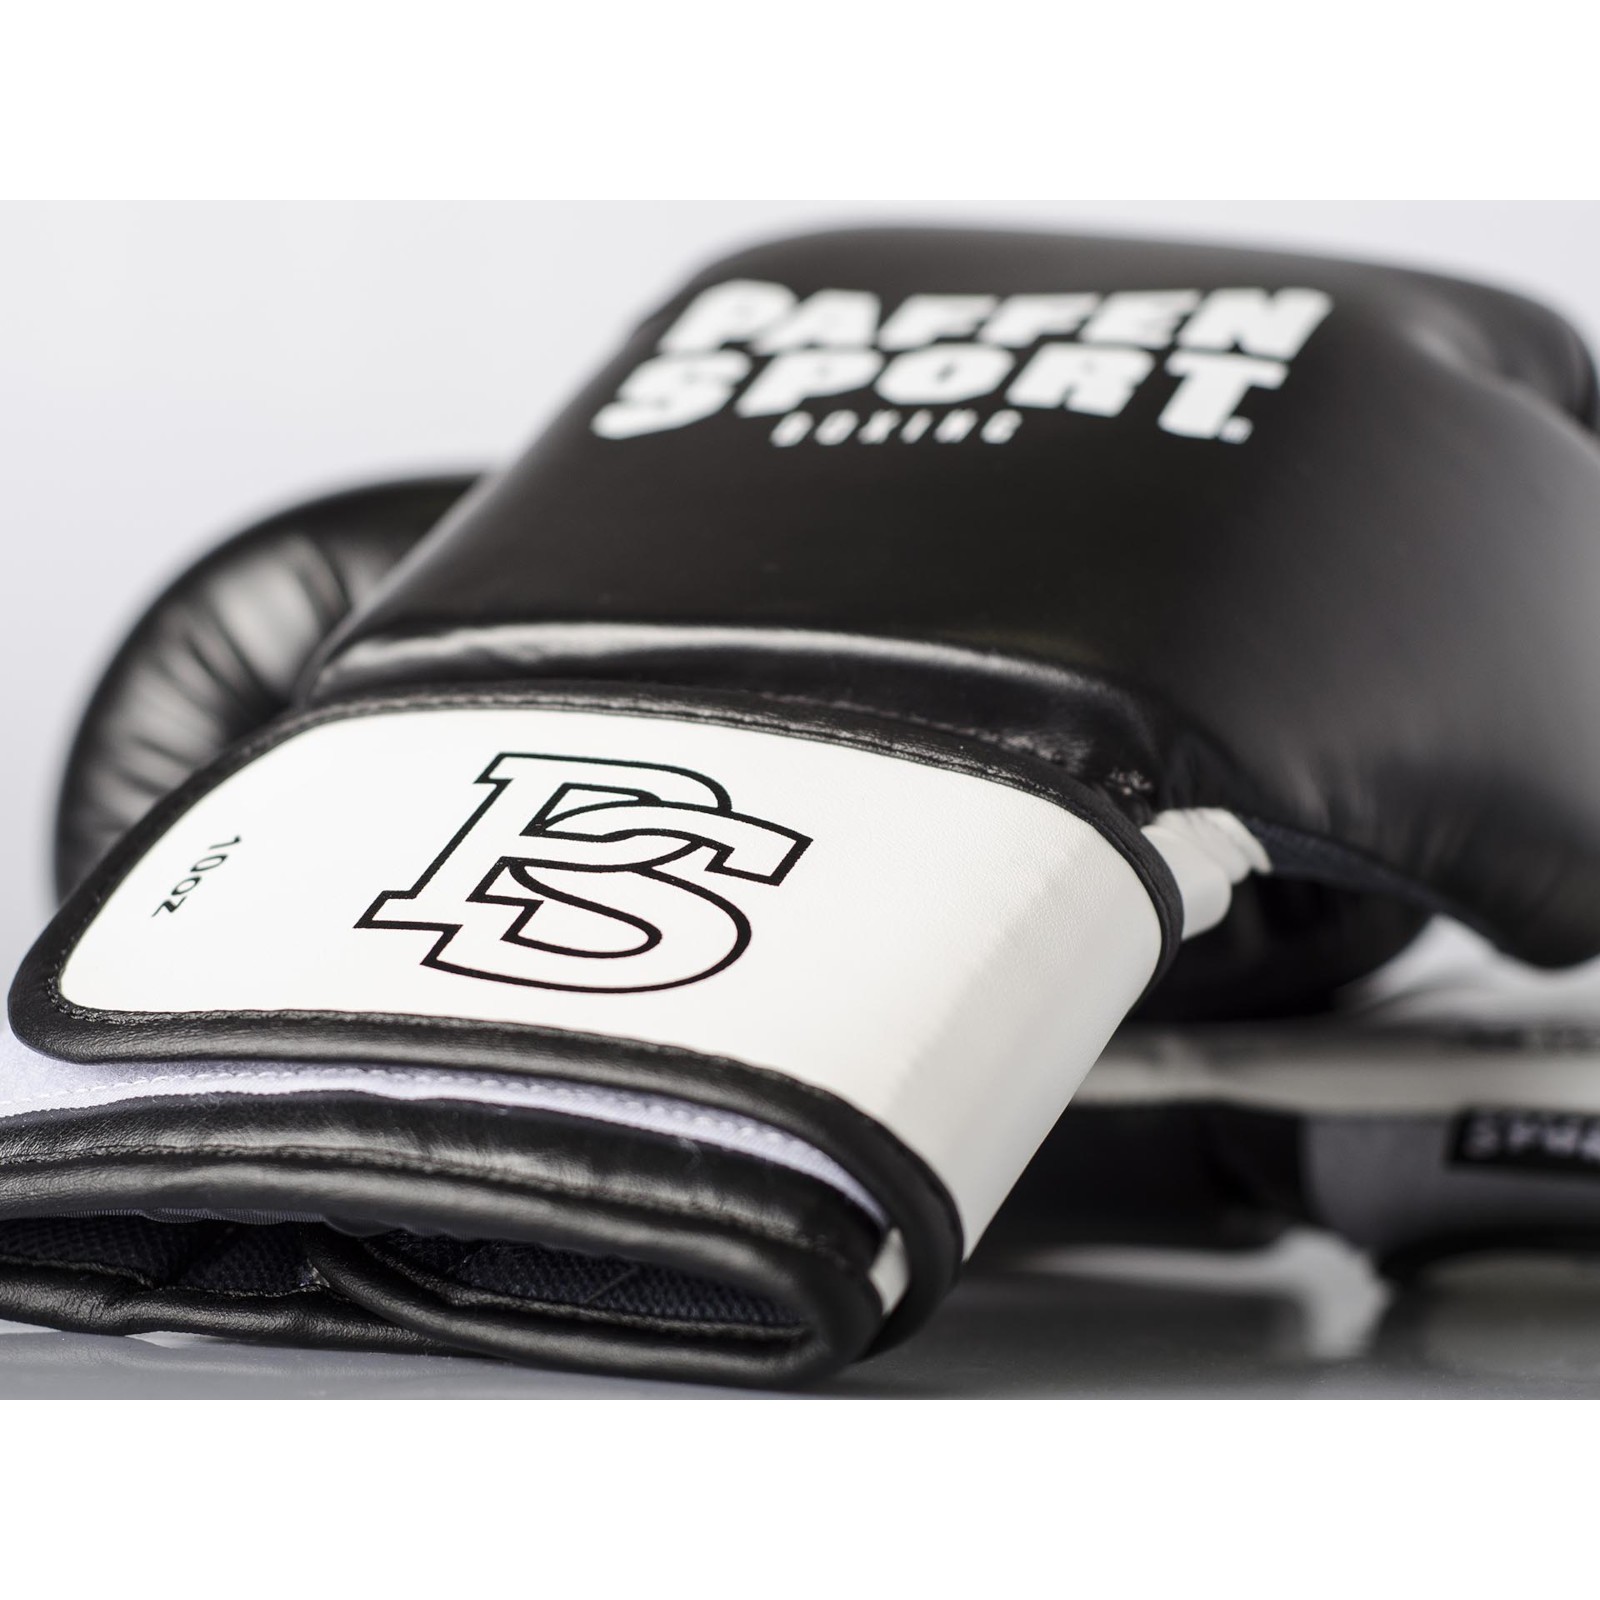 Paffen-Sport mujer! guantes de boxeo blanco / negro